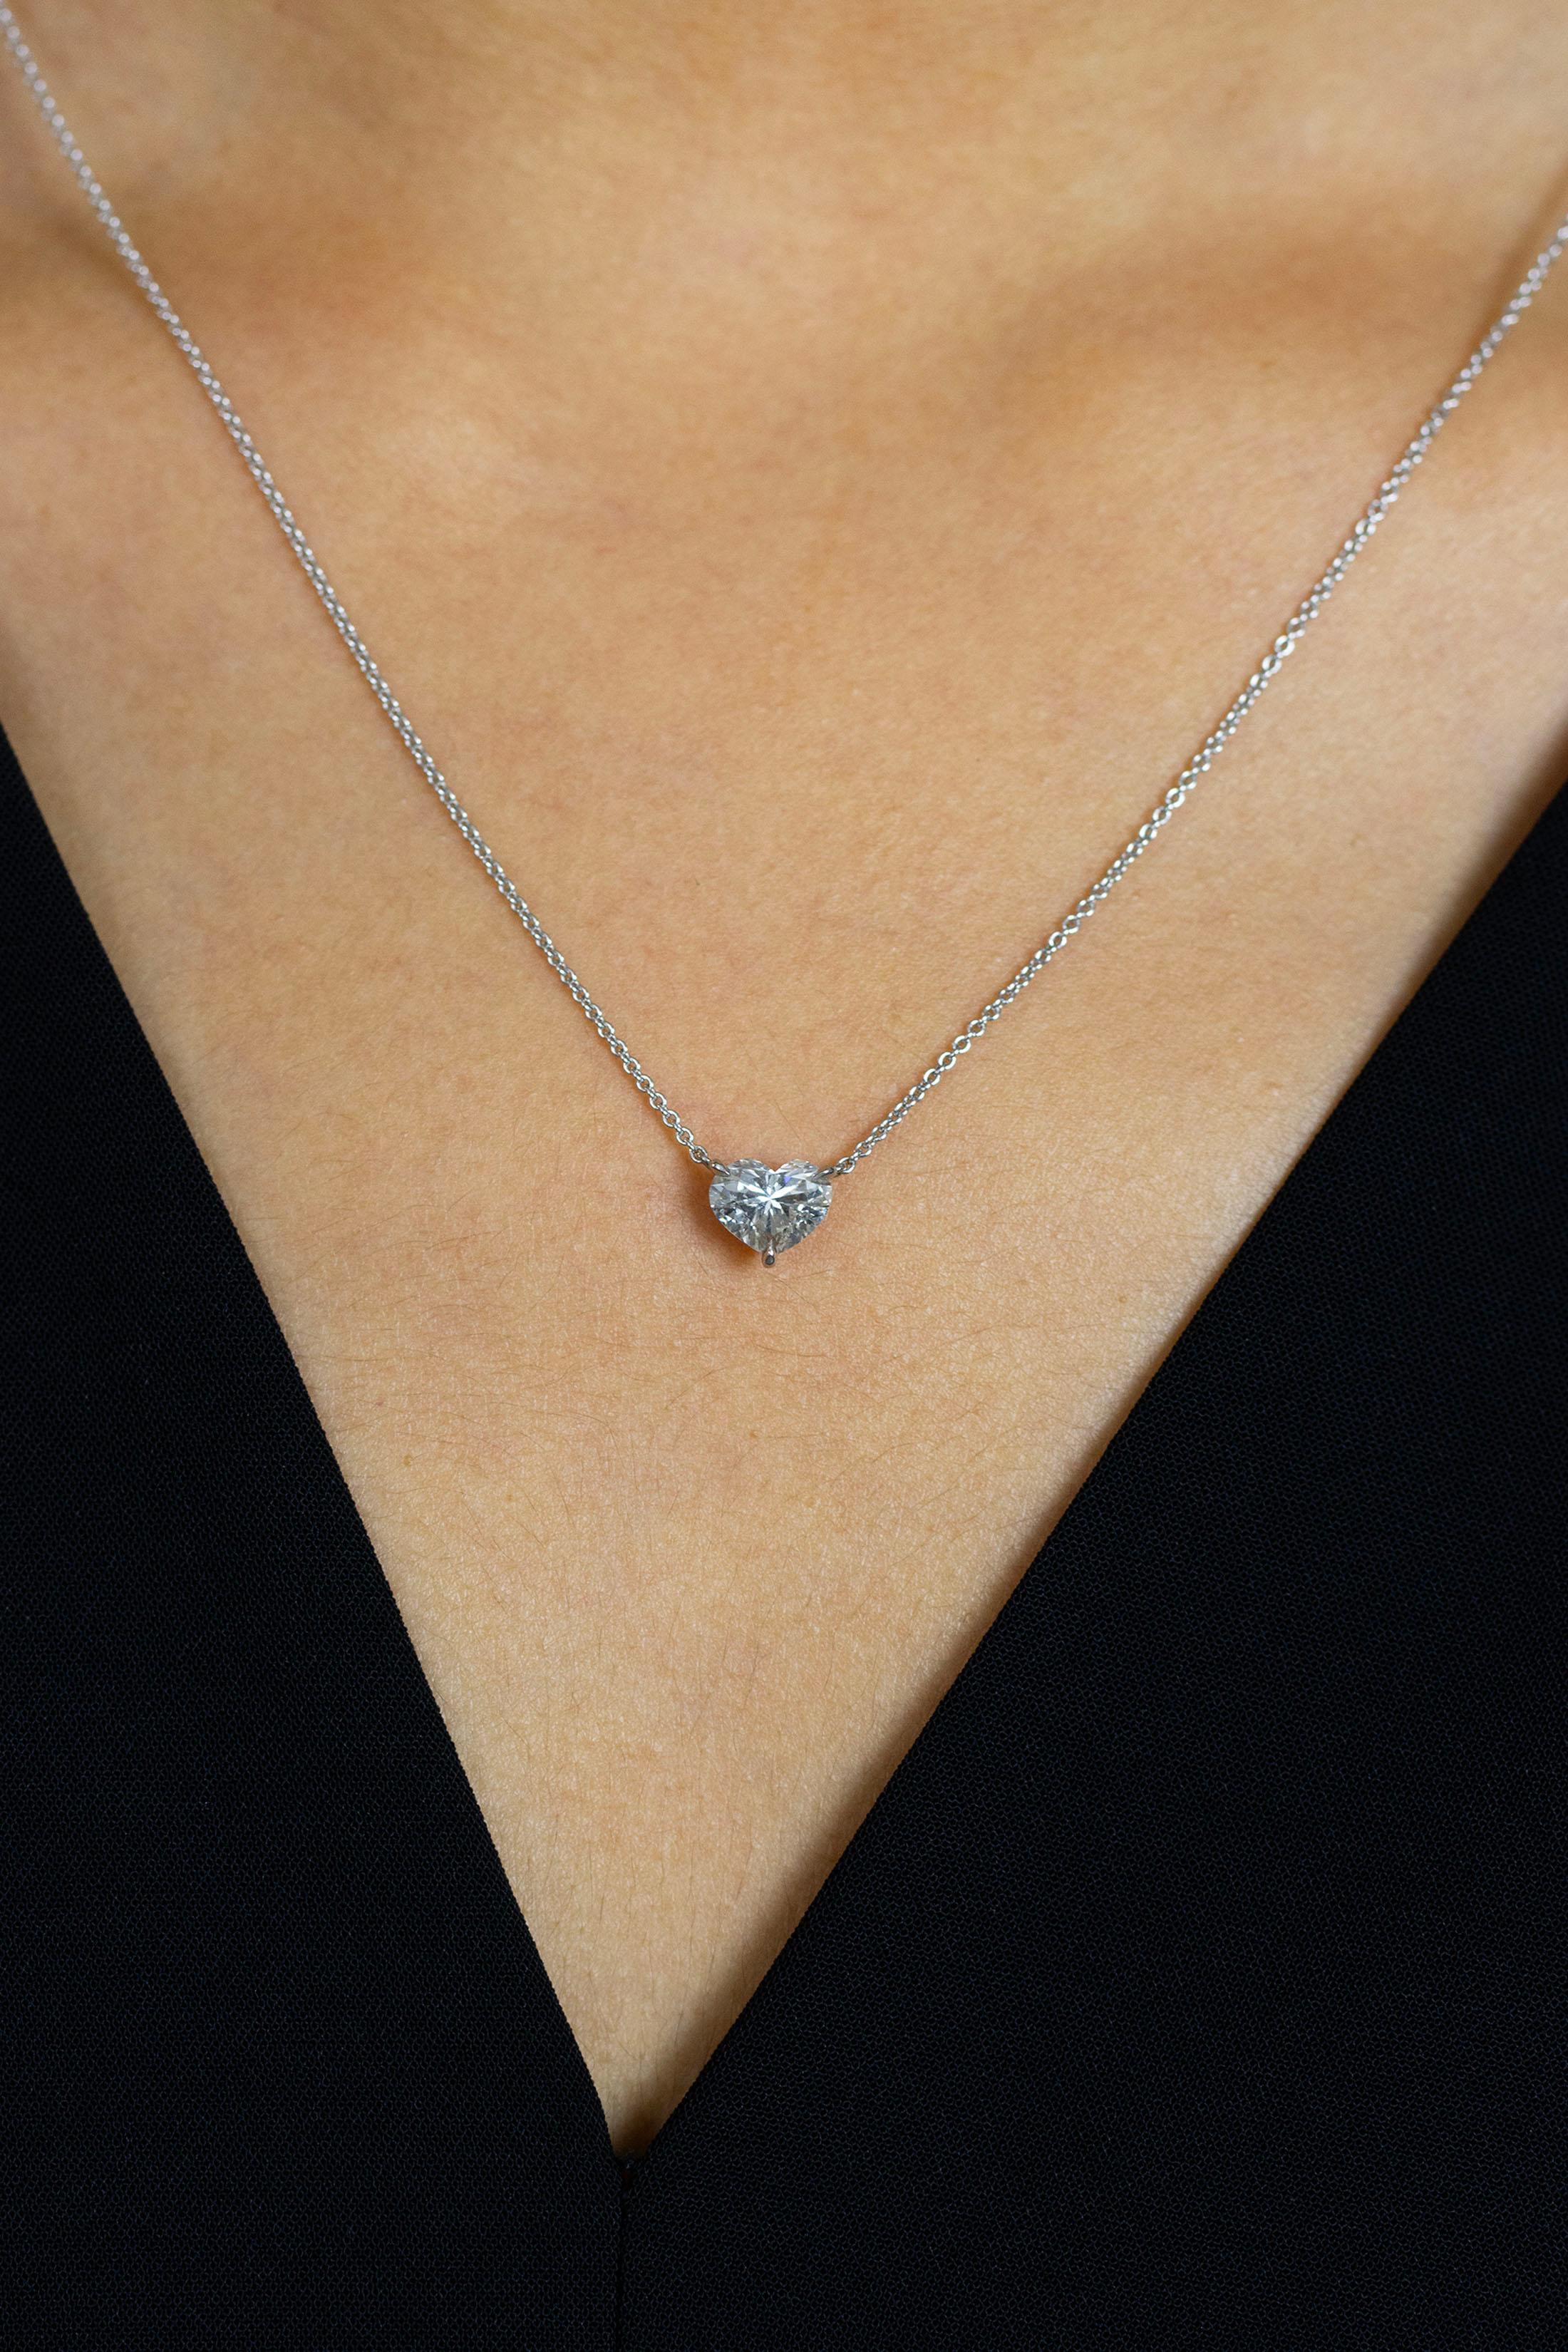 Heart Cut GIA Certified 1.18 Carats Heart Shape Diamond Solitaire Pendant Necklace For Sale